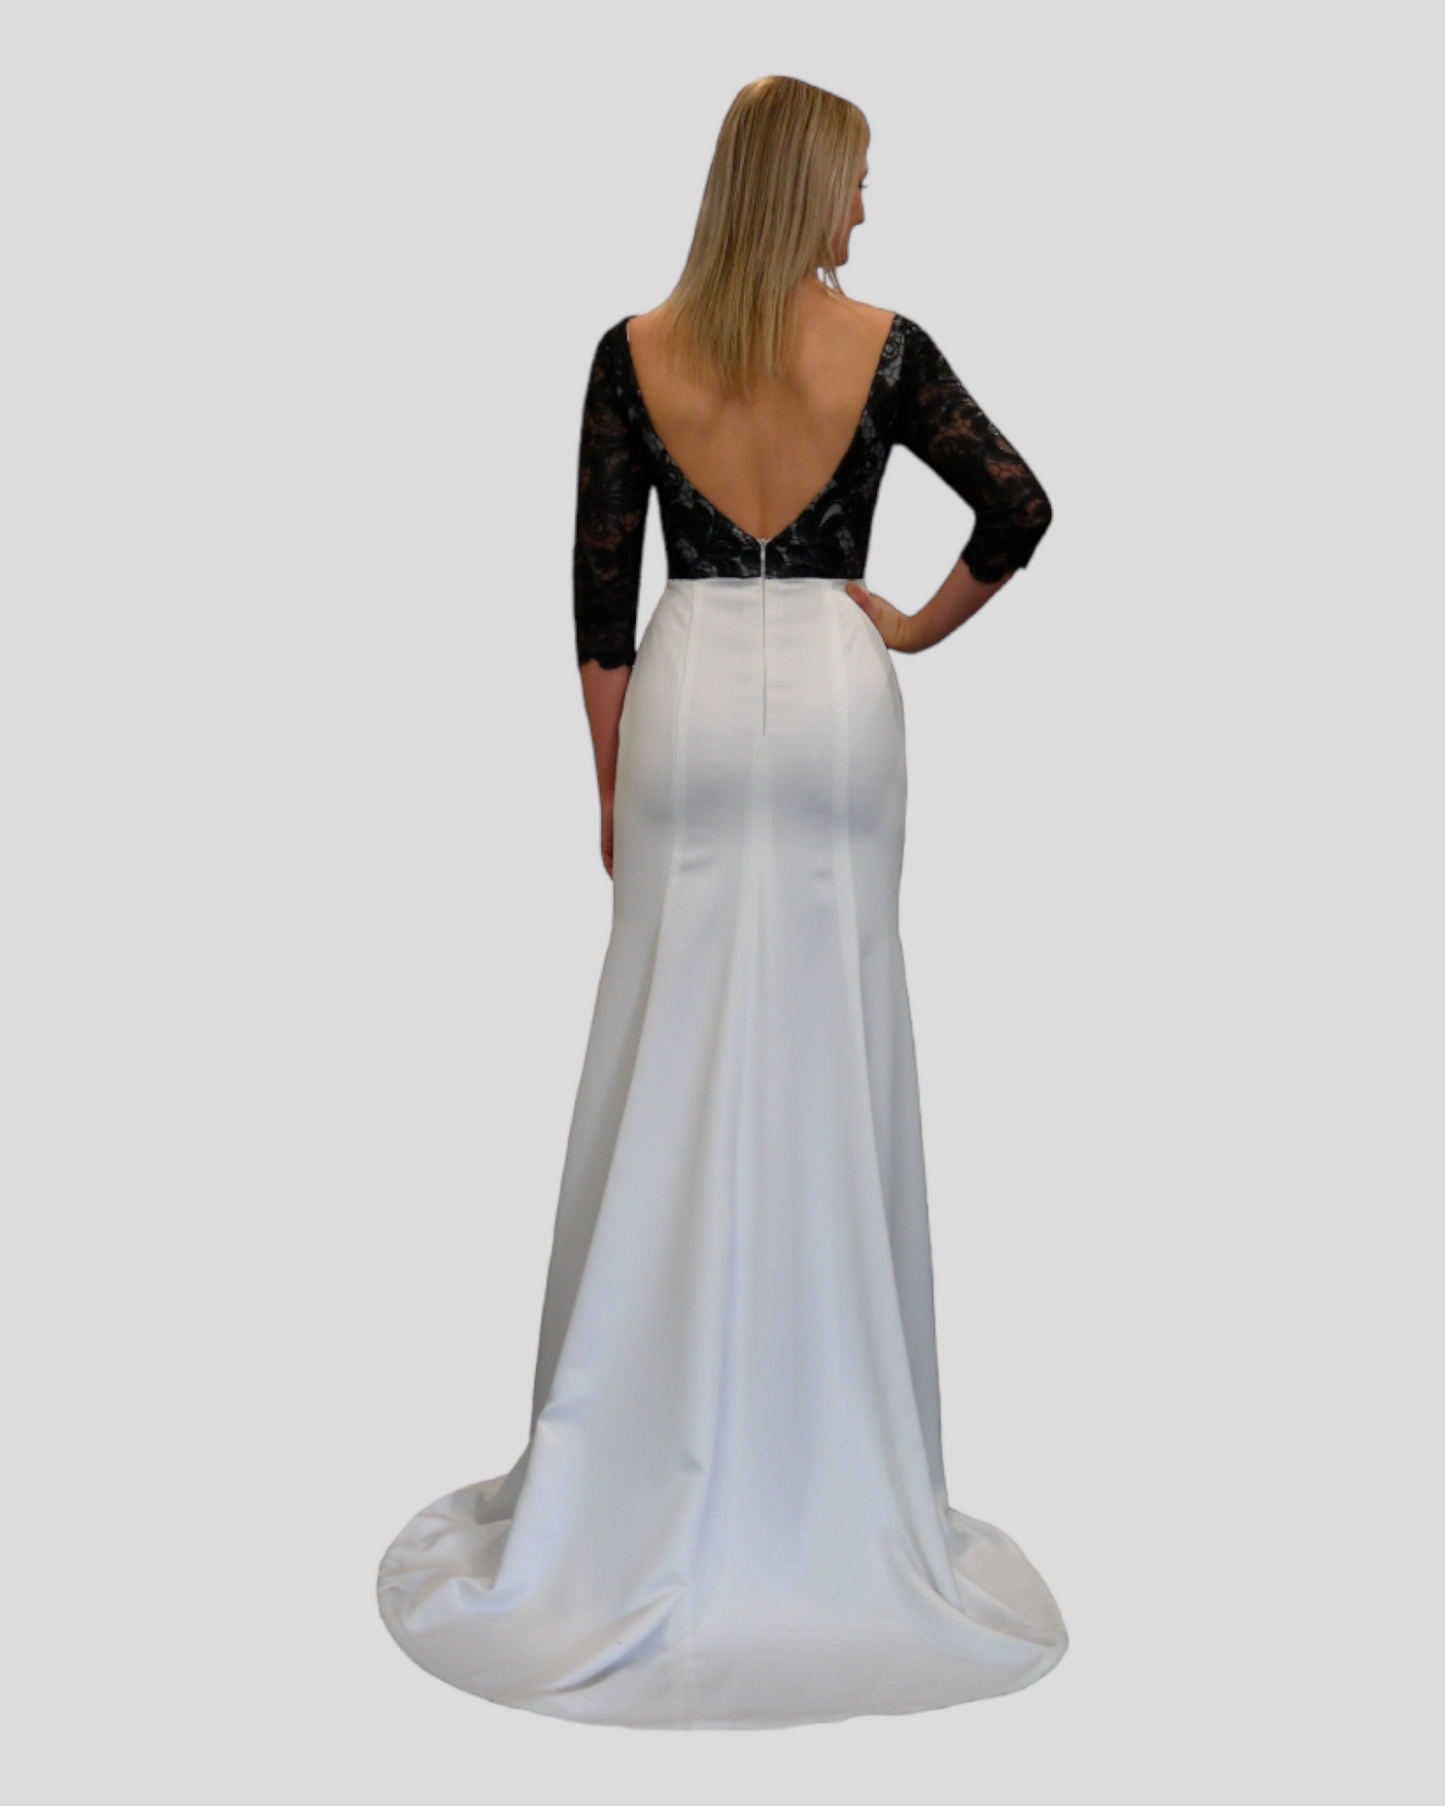 Savannah Black Lace and White Evening Dress